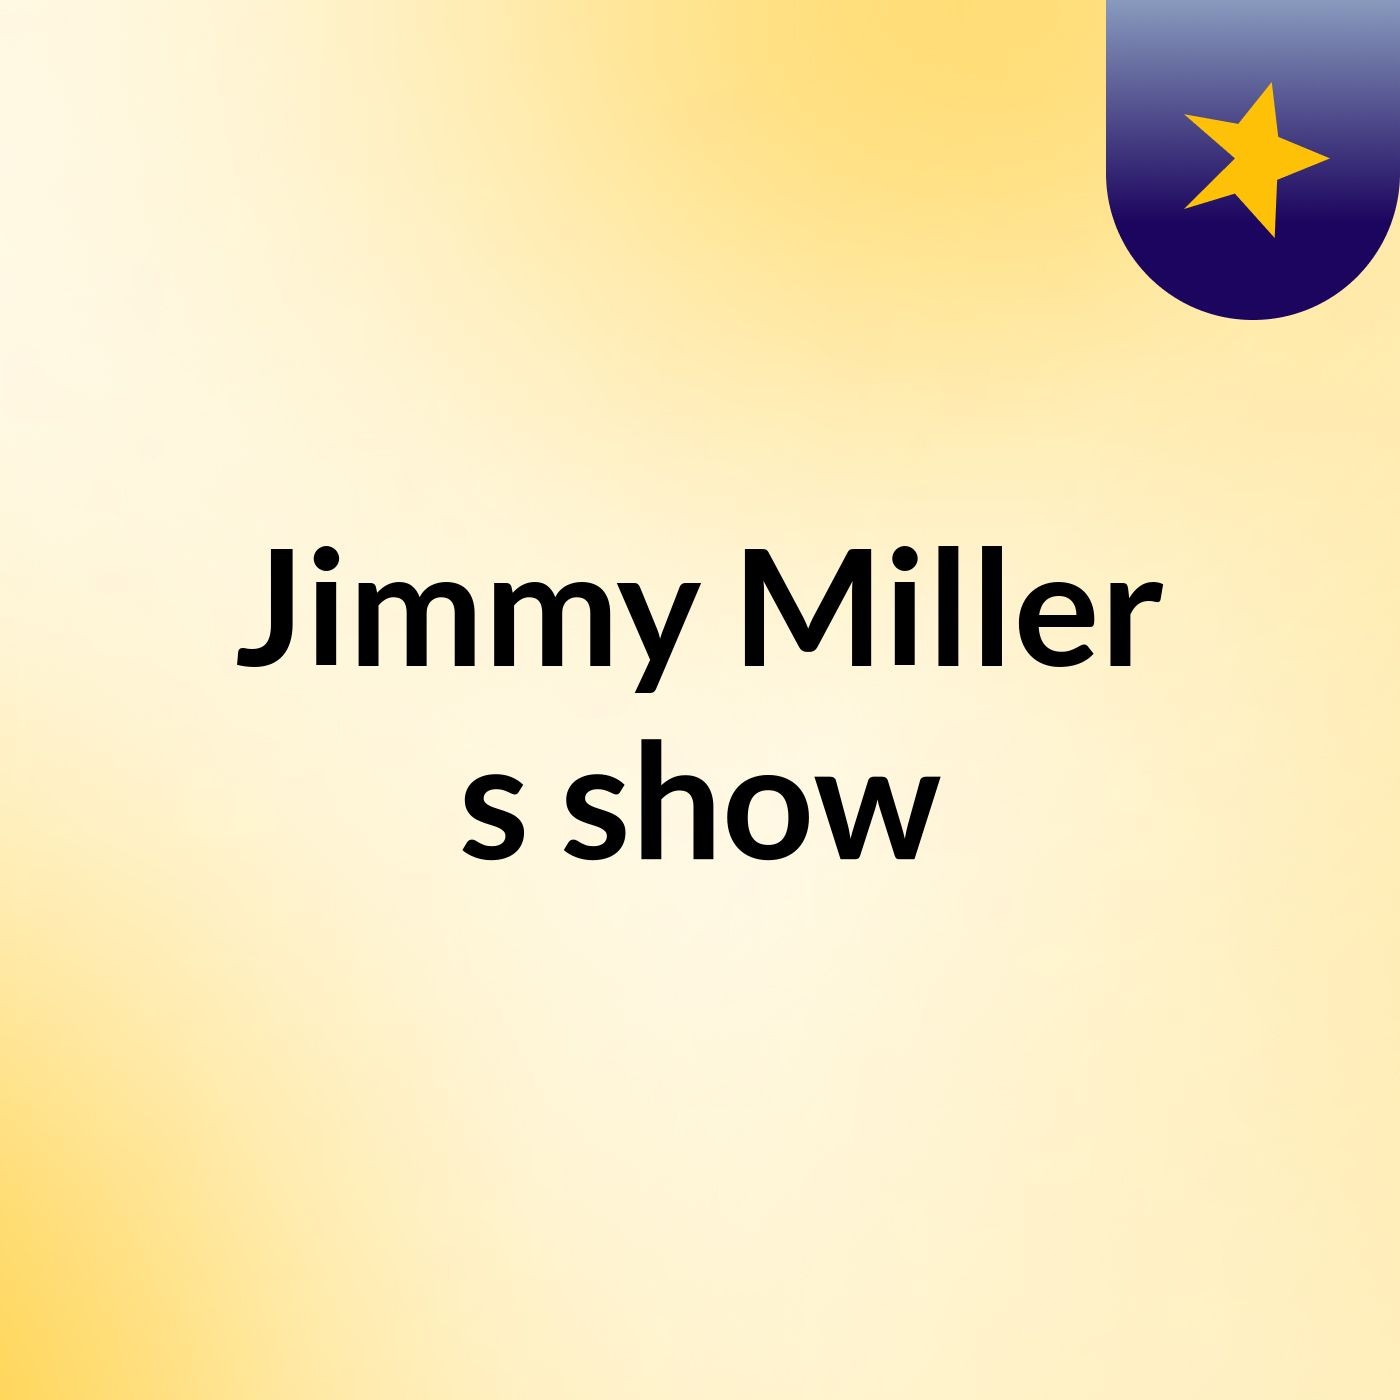 Jimmy Miller's show